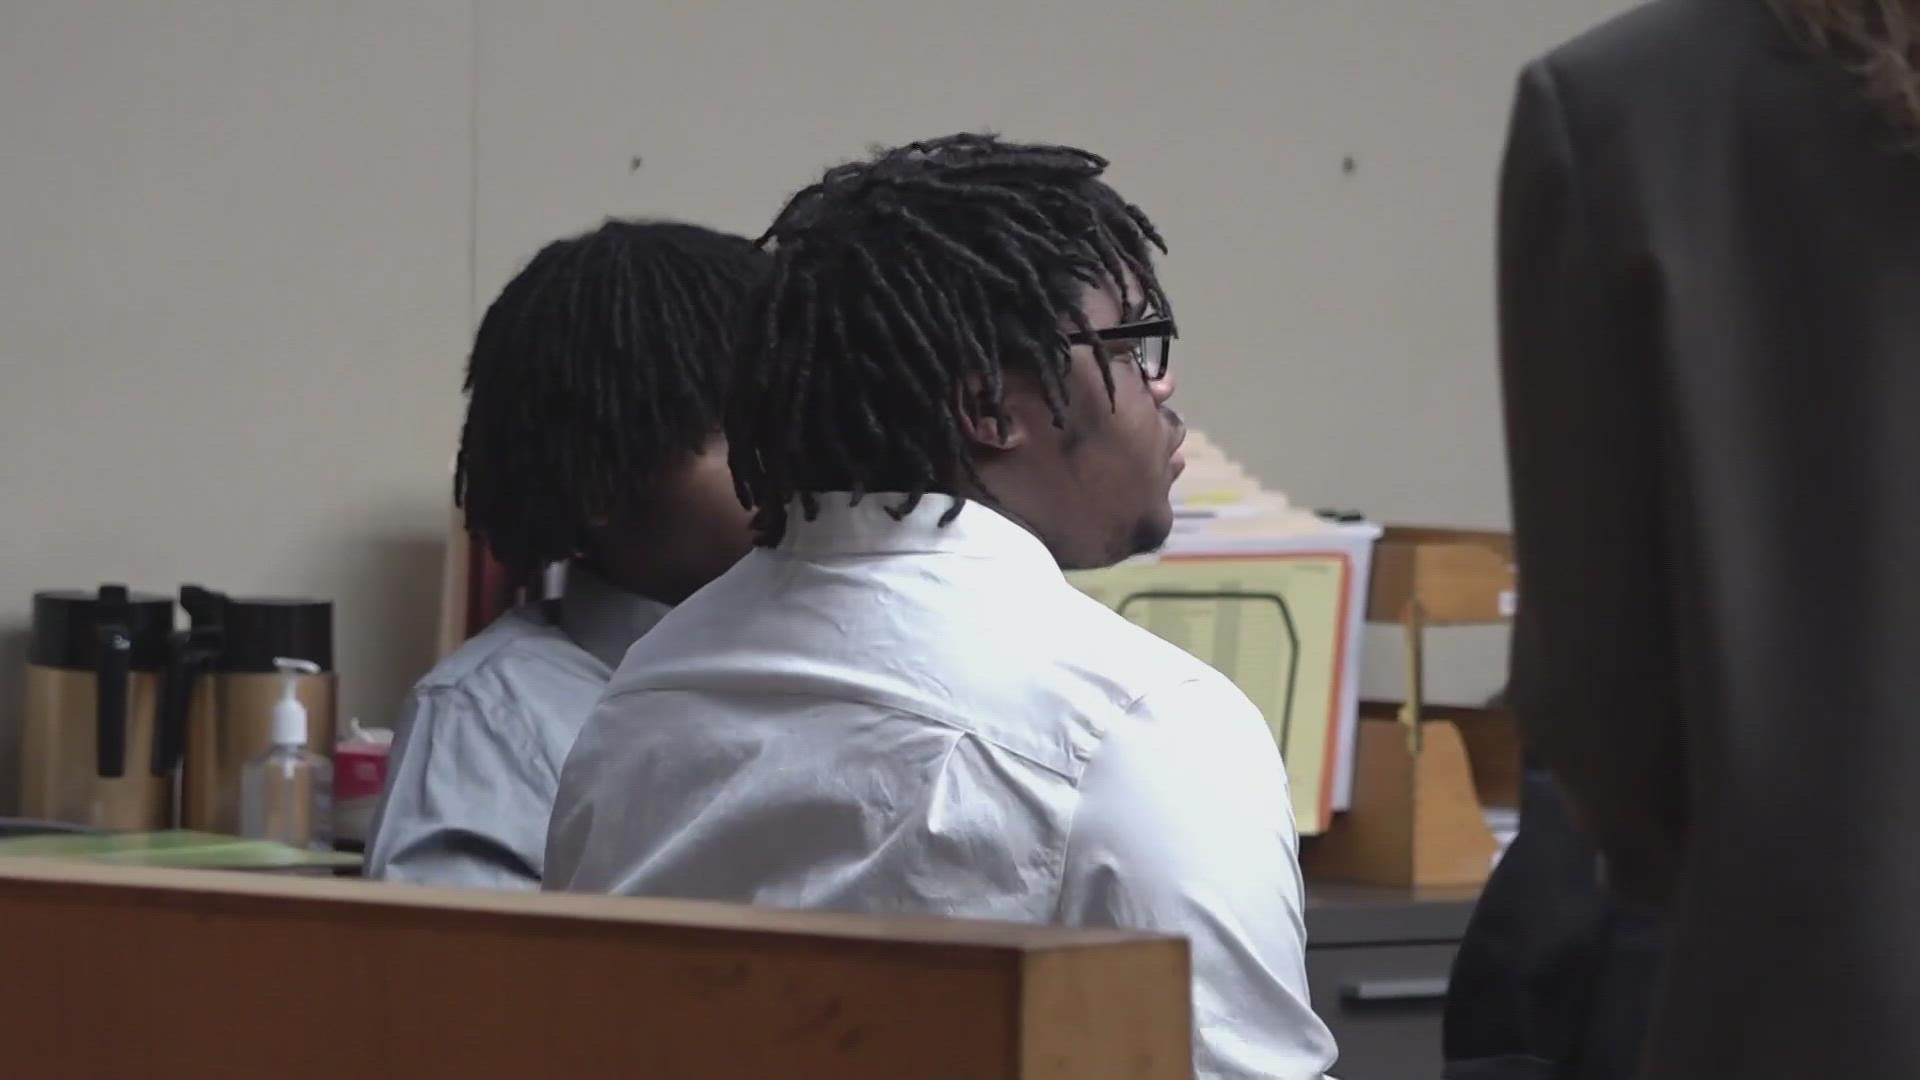 Deondre Davis, 18, and Rashan Jordan, 16, face trial later this month.